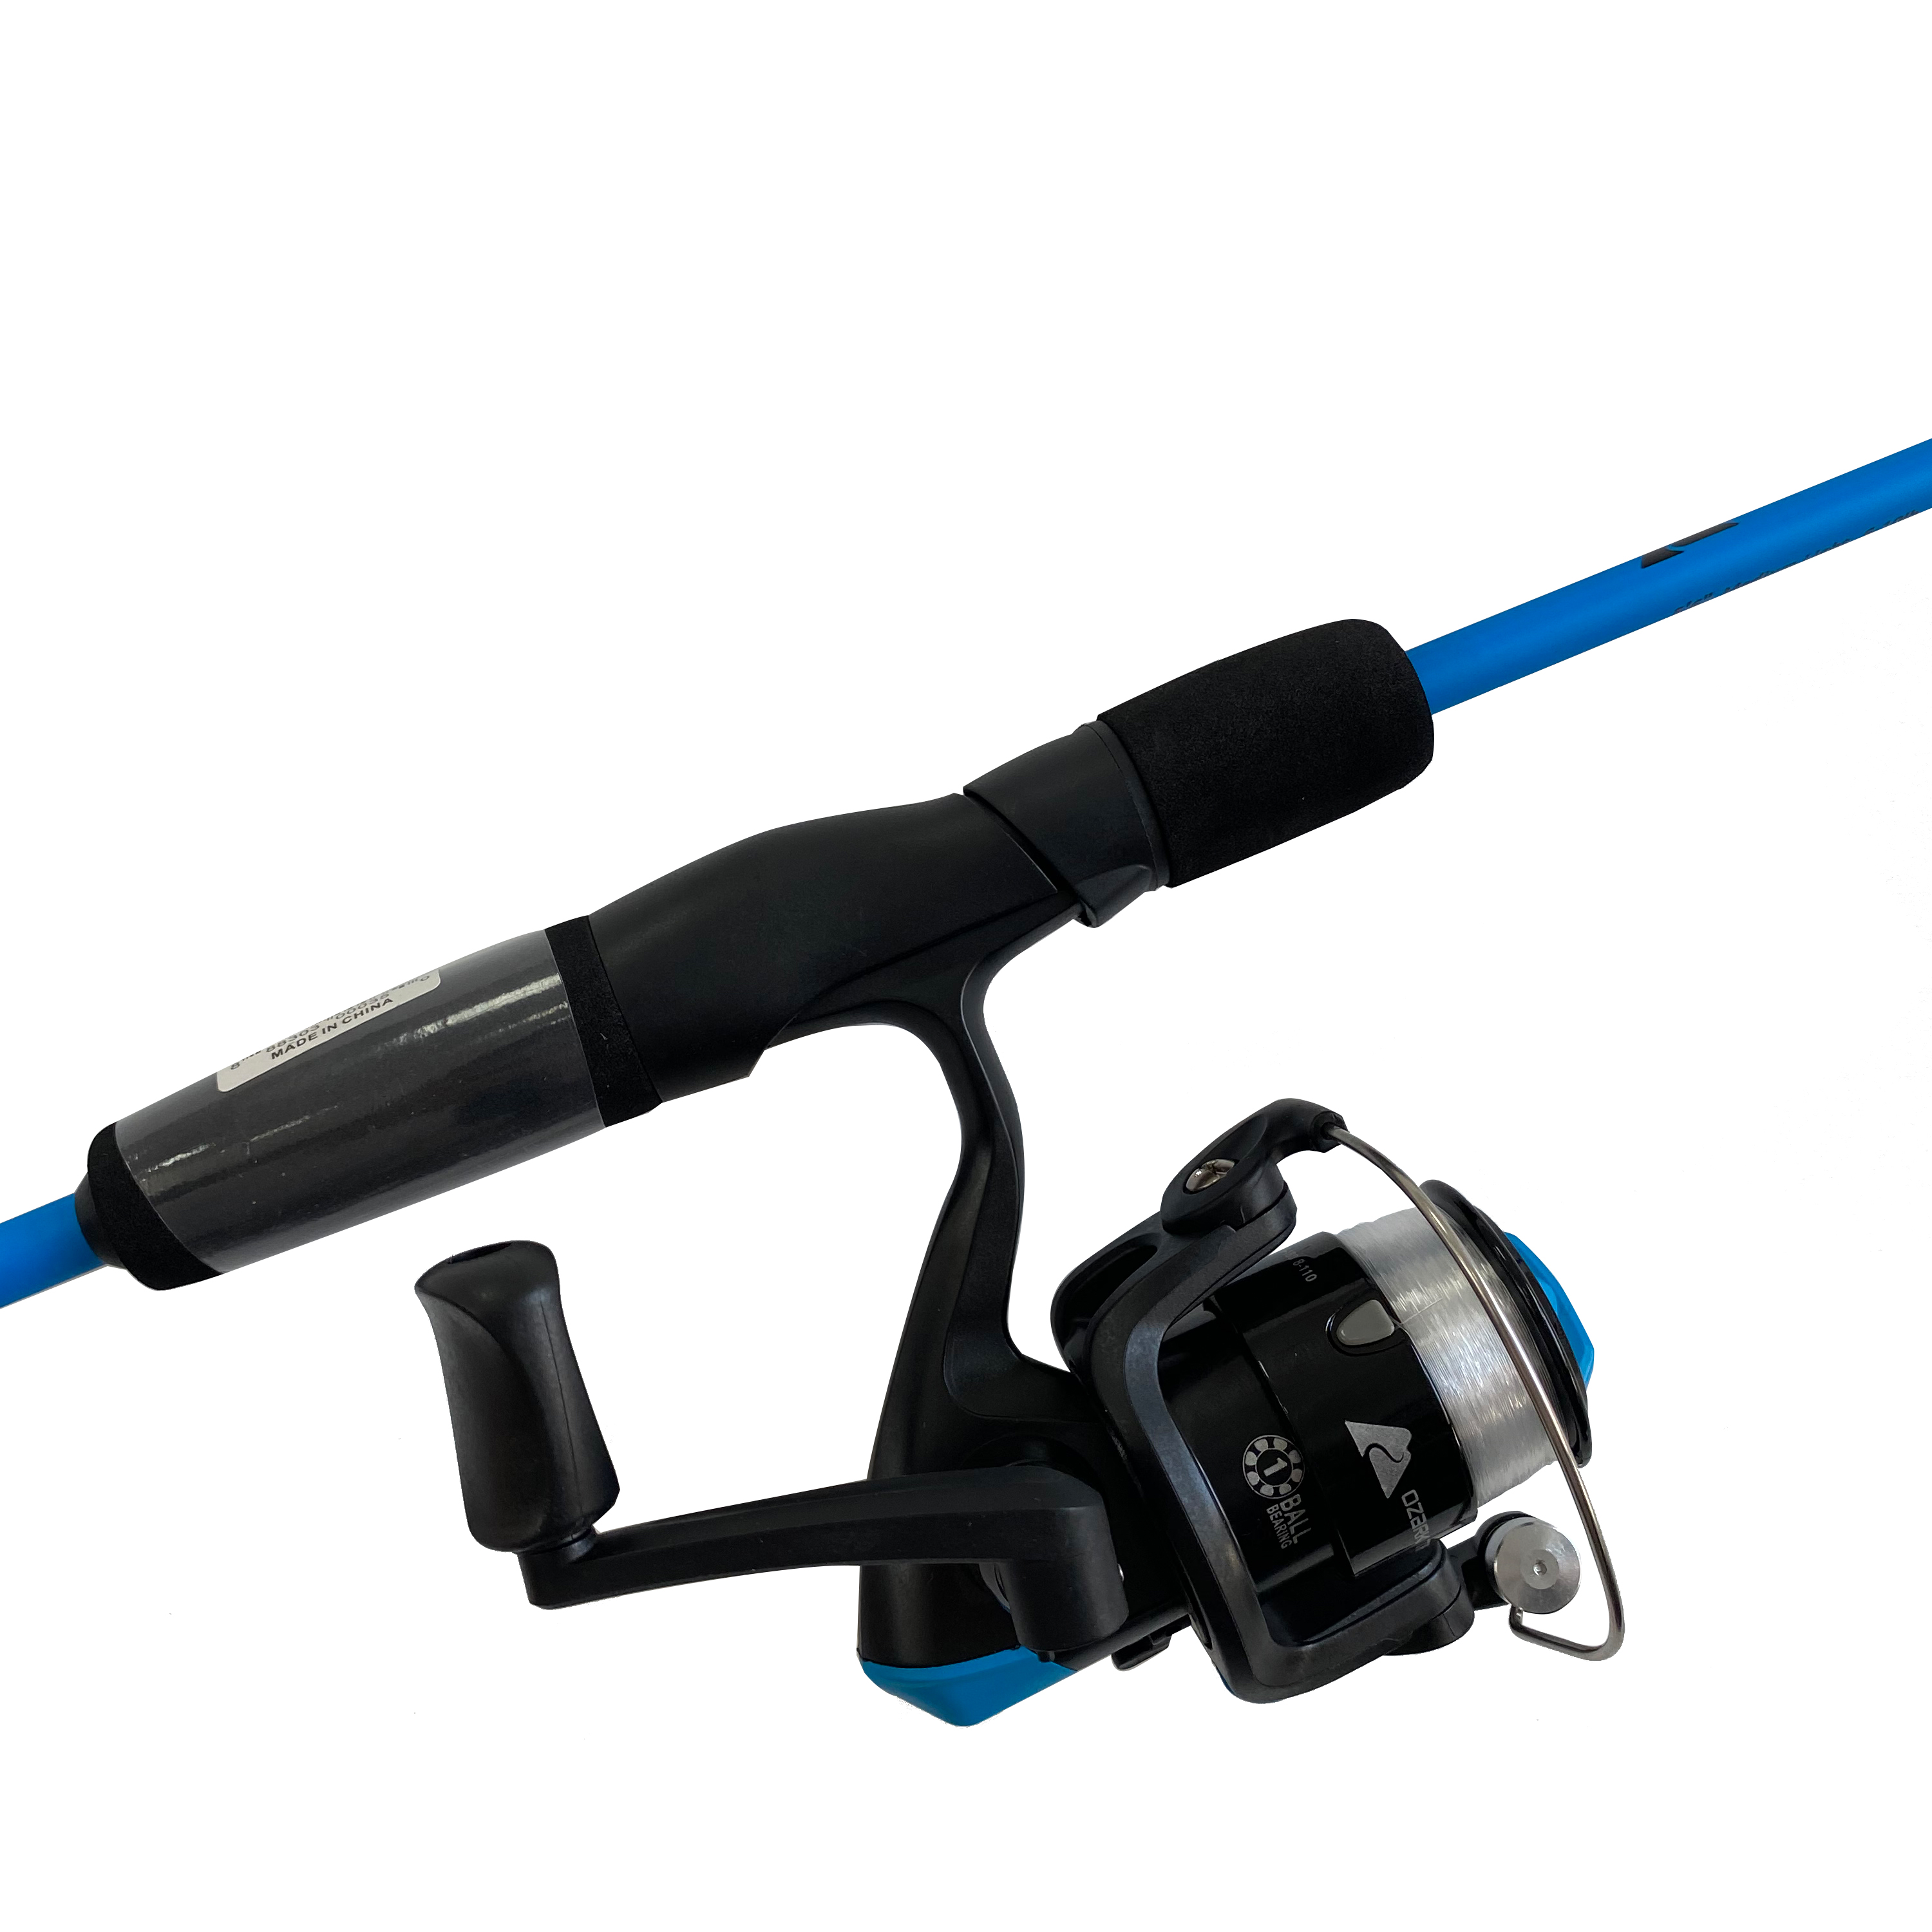 Ozark Trail Wayfarer Spinning Fishing Rod and Reel Combo, Blue - image 2 of 5